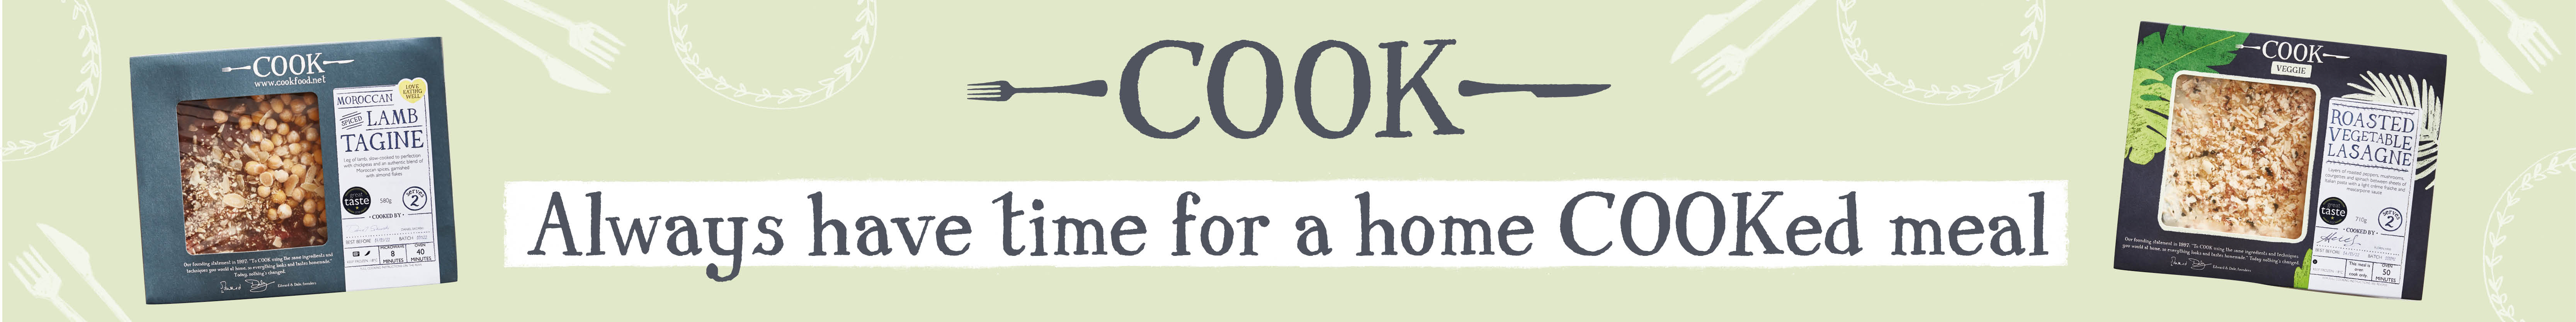 Cook Banner Advert